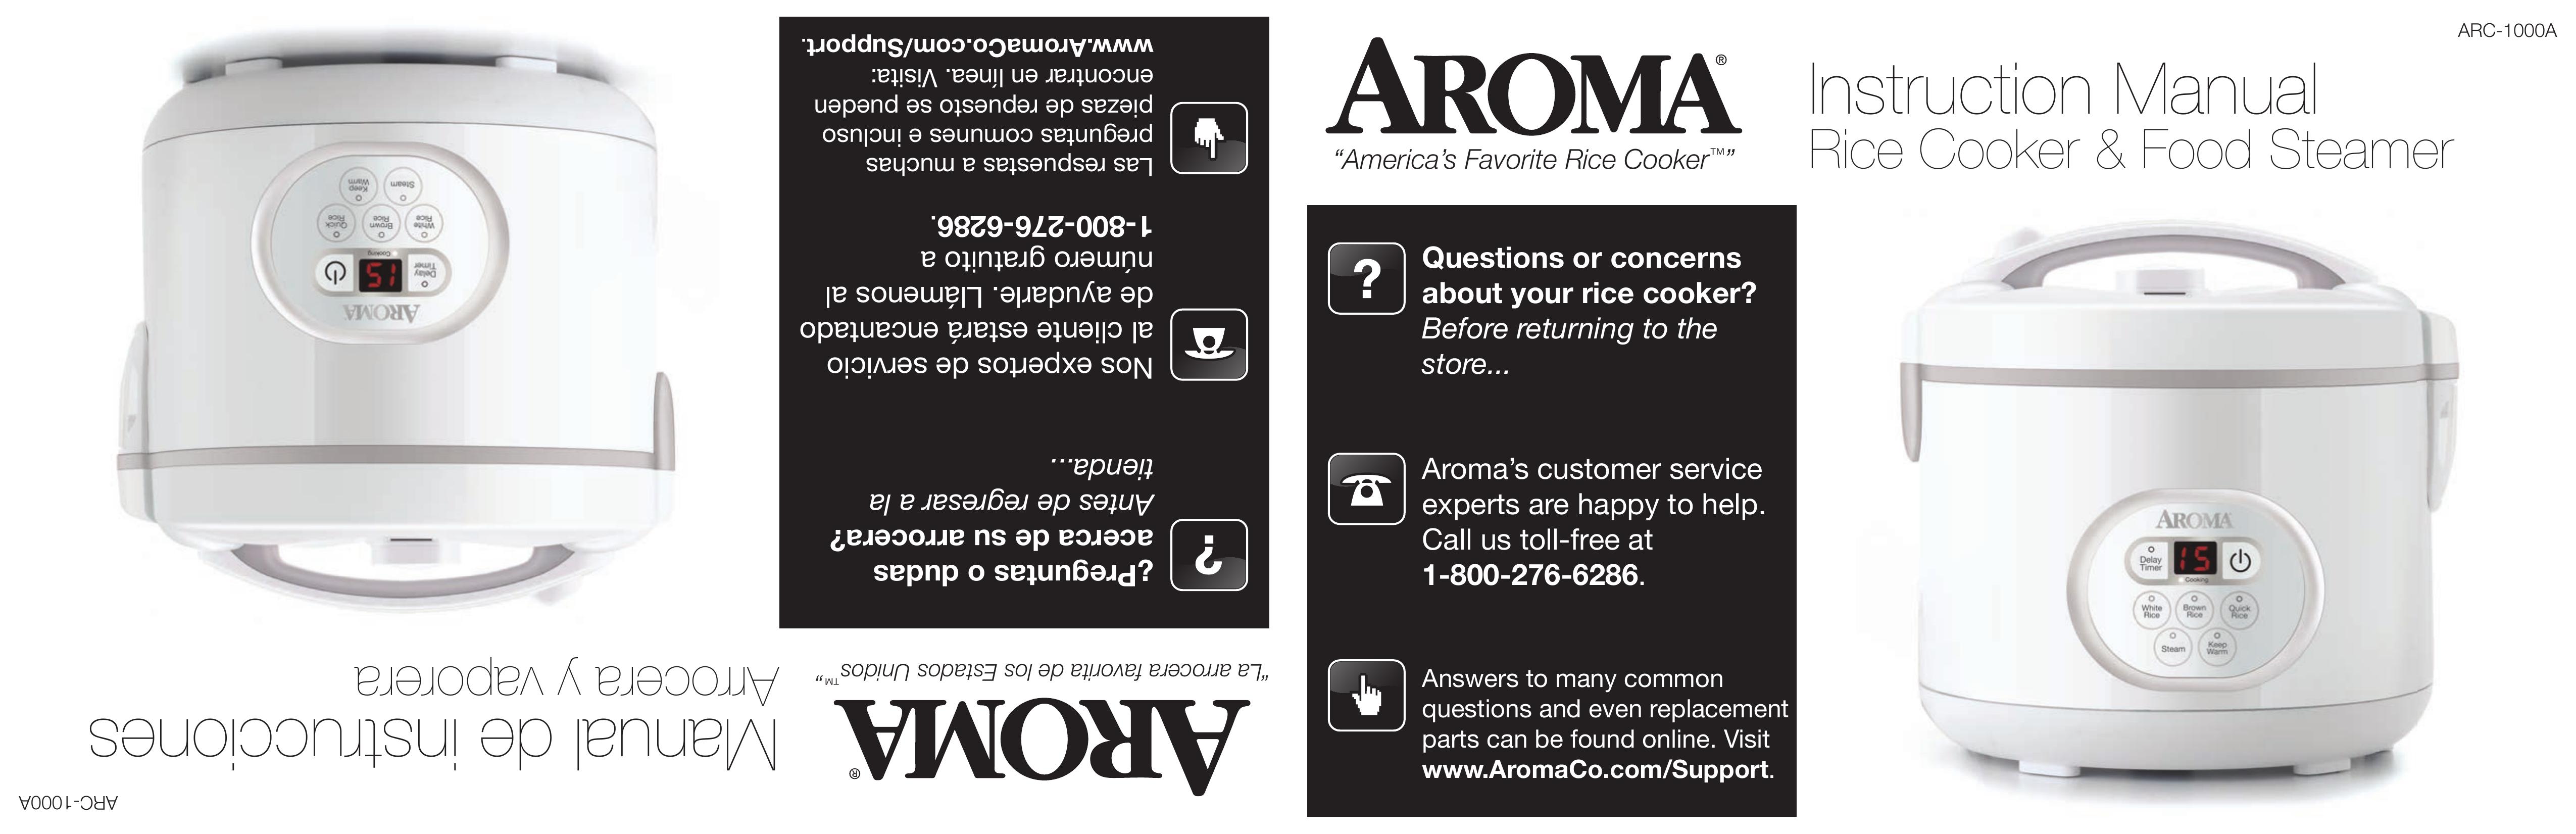 Aroma ARC-1000A Rice Cooker User Manual